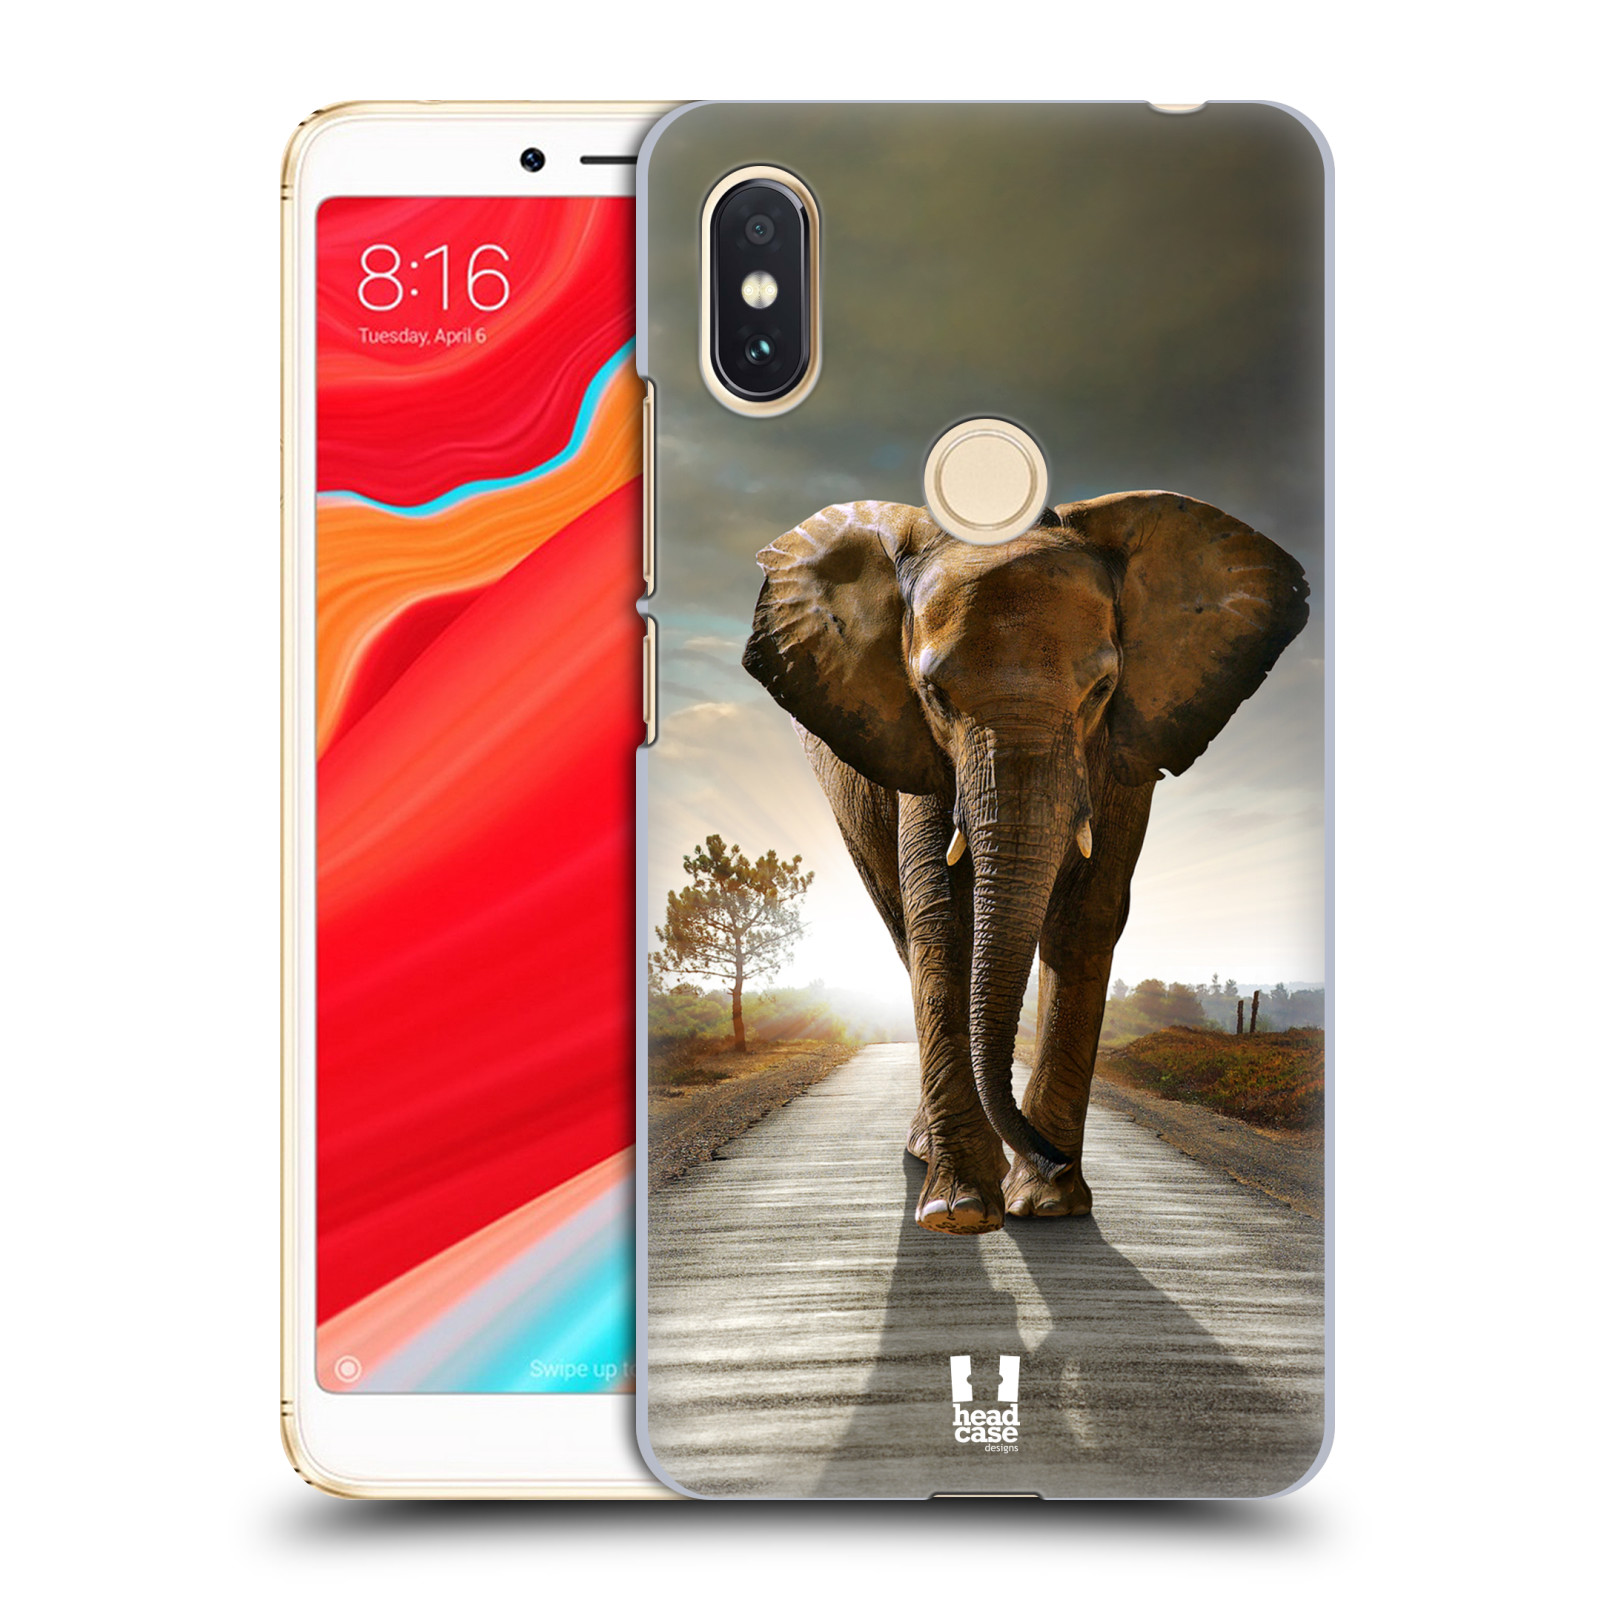 HEAD CASE plastový obal na mobil Xiaomi Redmi S2 vzor Divočina, Divoký život a zvířata foto AFRIKA KRÁČEJÍCI SLON